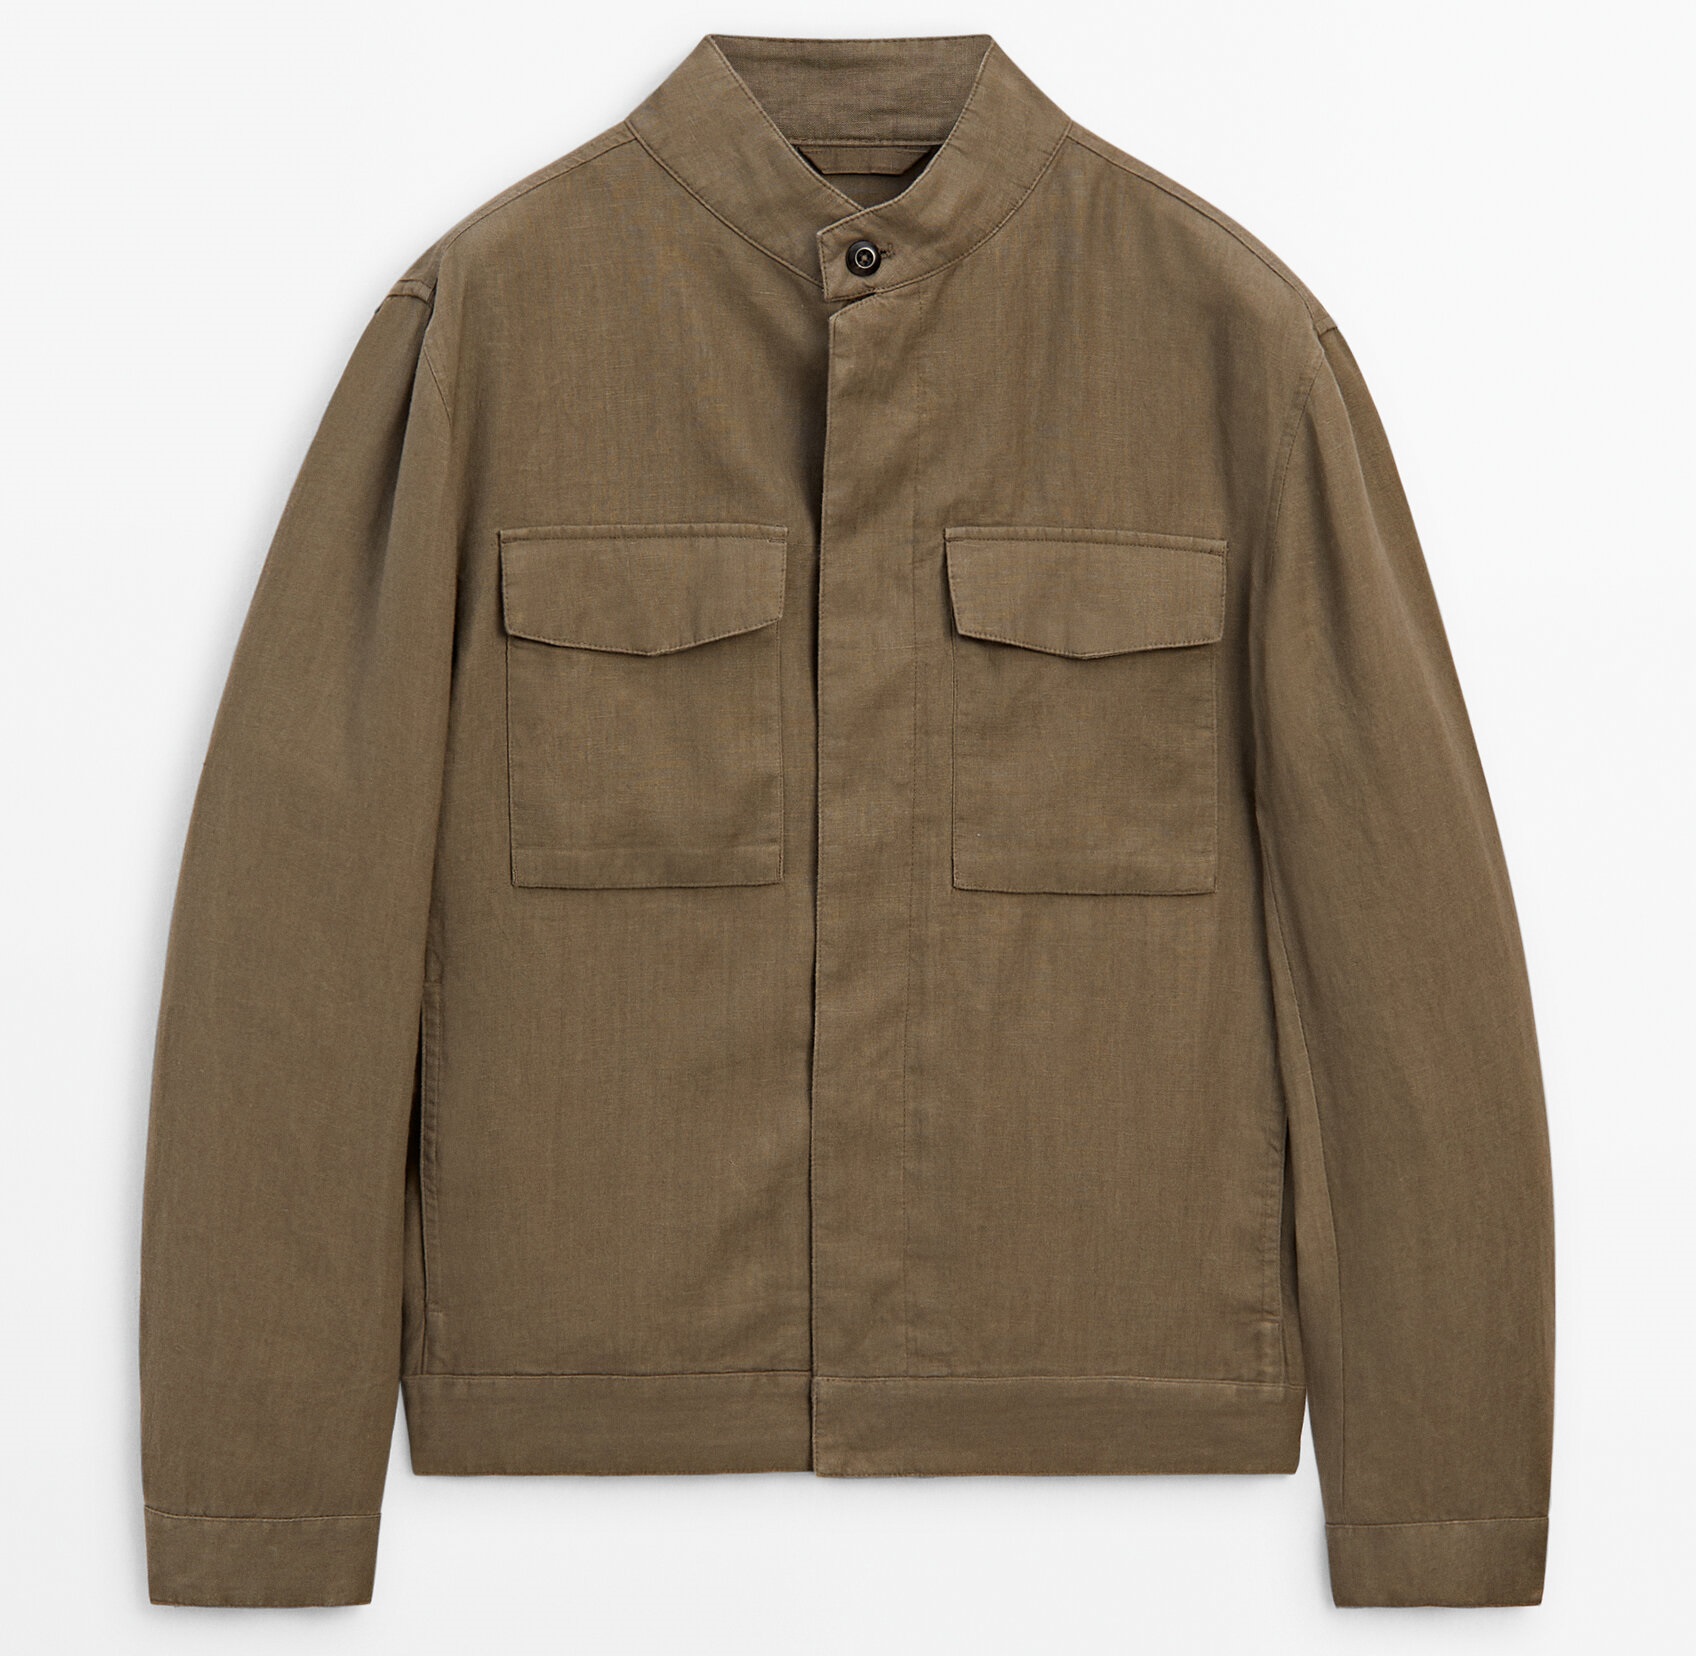 Куртка Massimo Dutti 100% Linen With Pockets, хаки куртка рубашка massimo dutti 100% cotton with pockets темный хаки